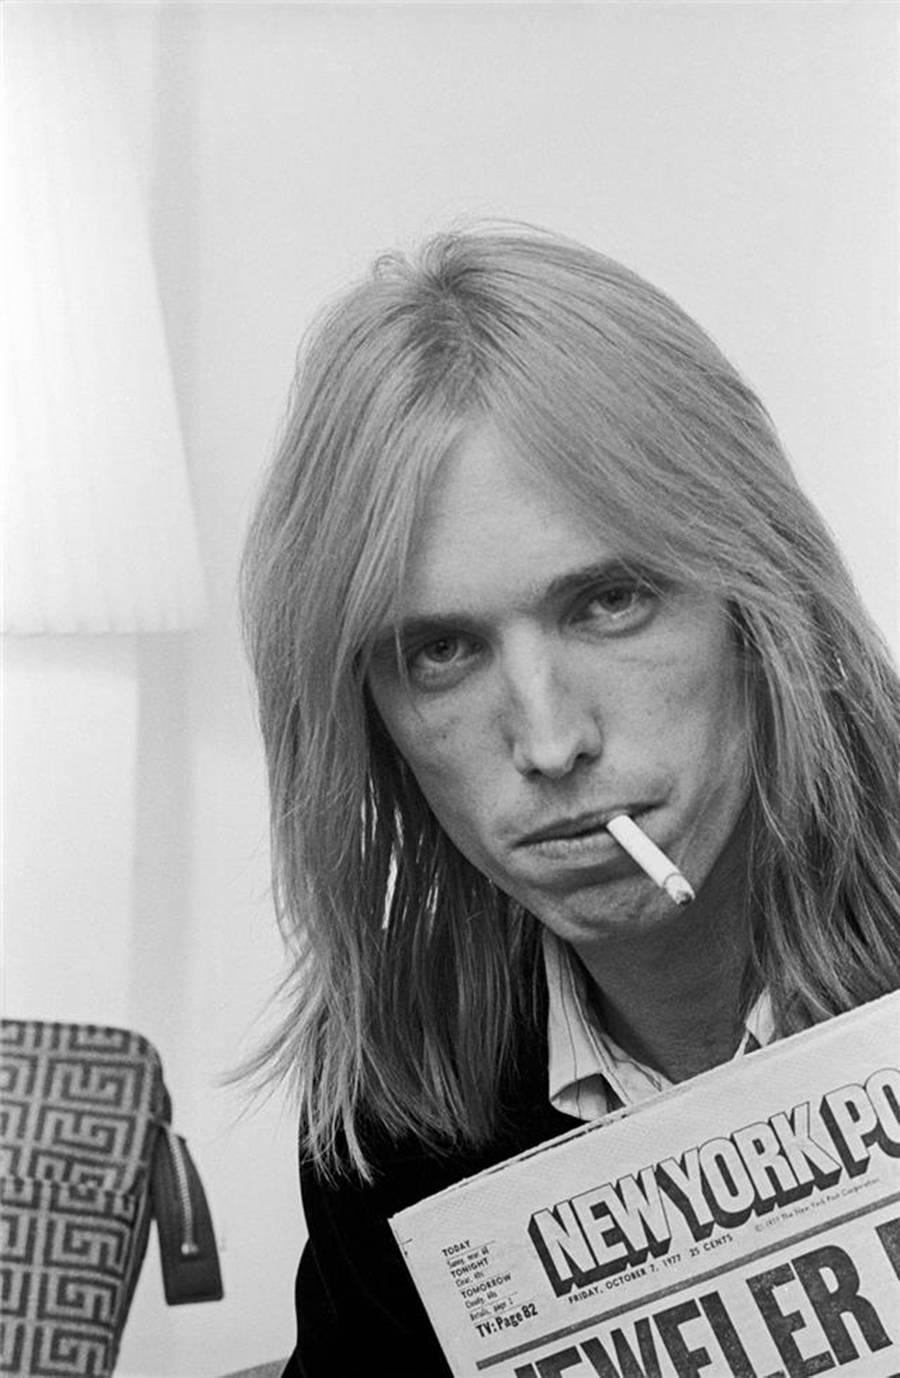 Allan Tannenbaum Black and White Photograph - Tom Petty, New York City, 1977